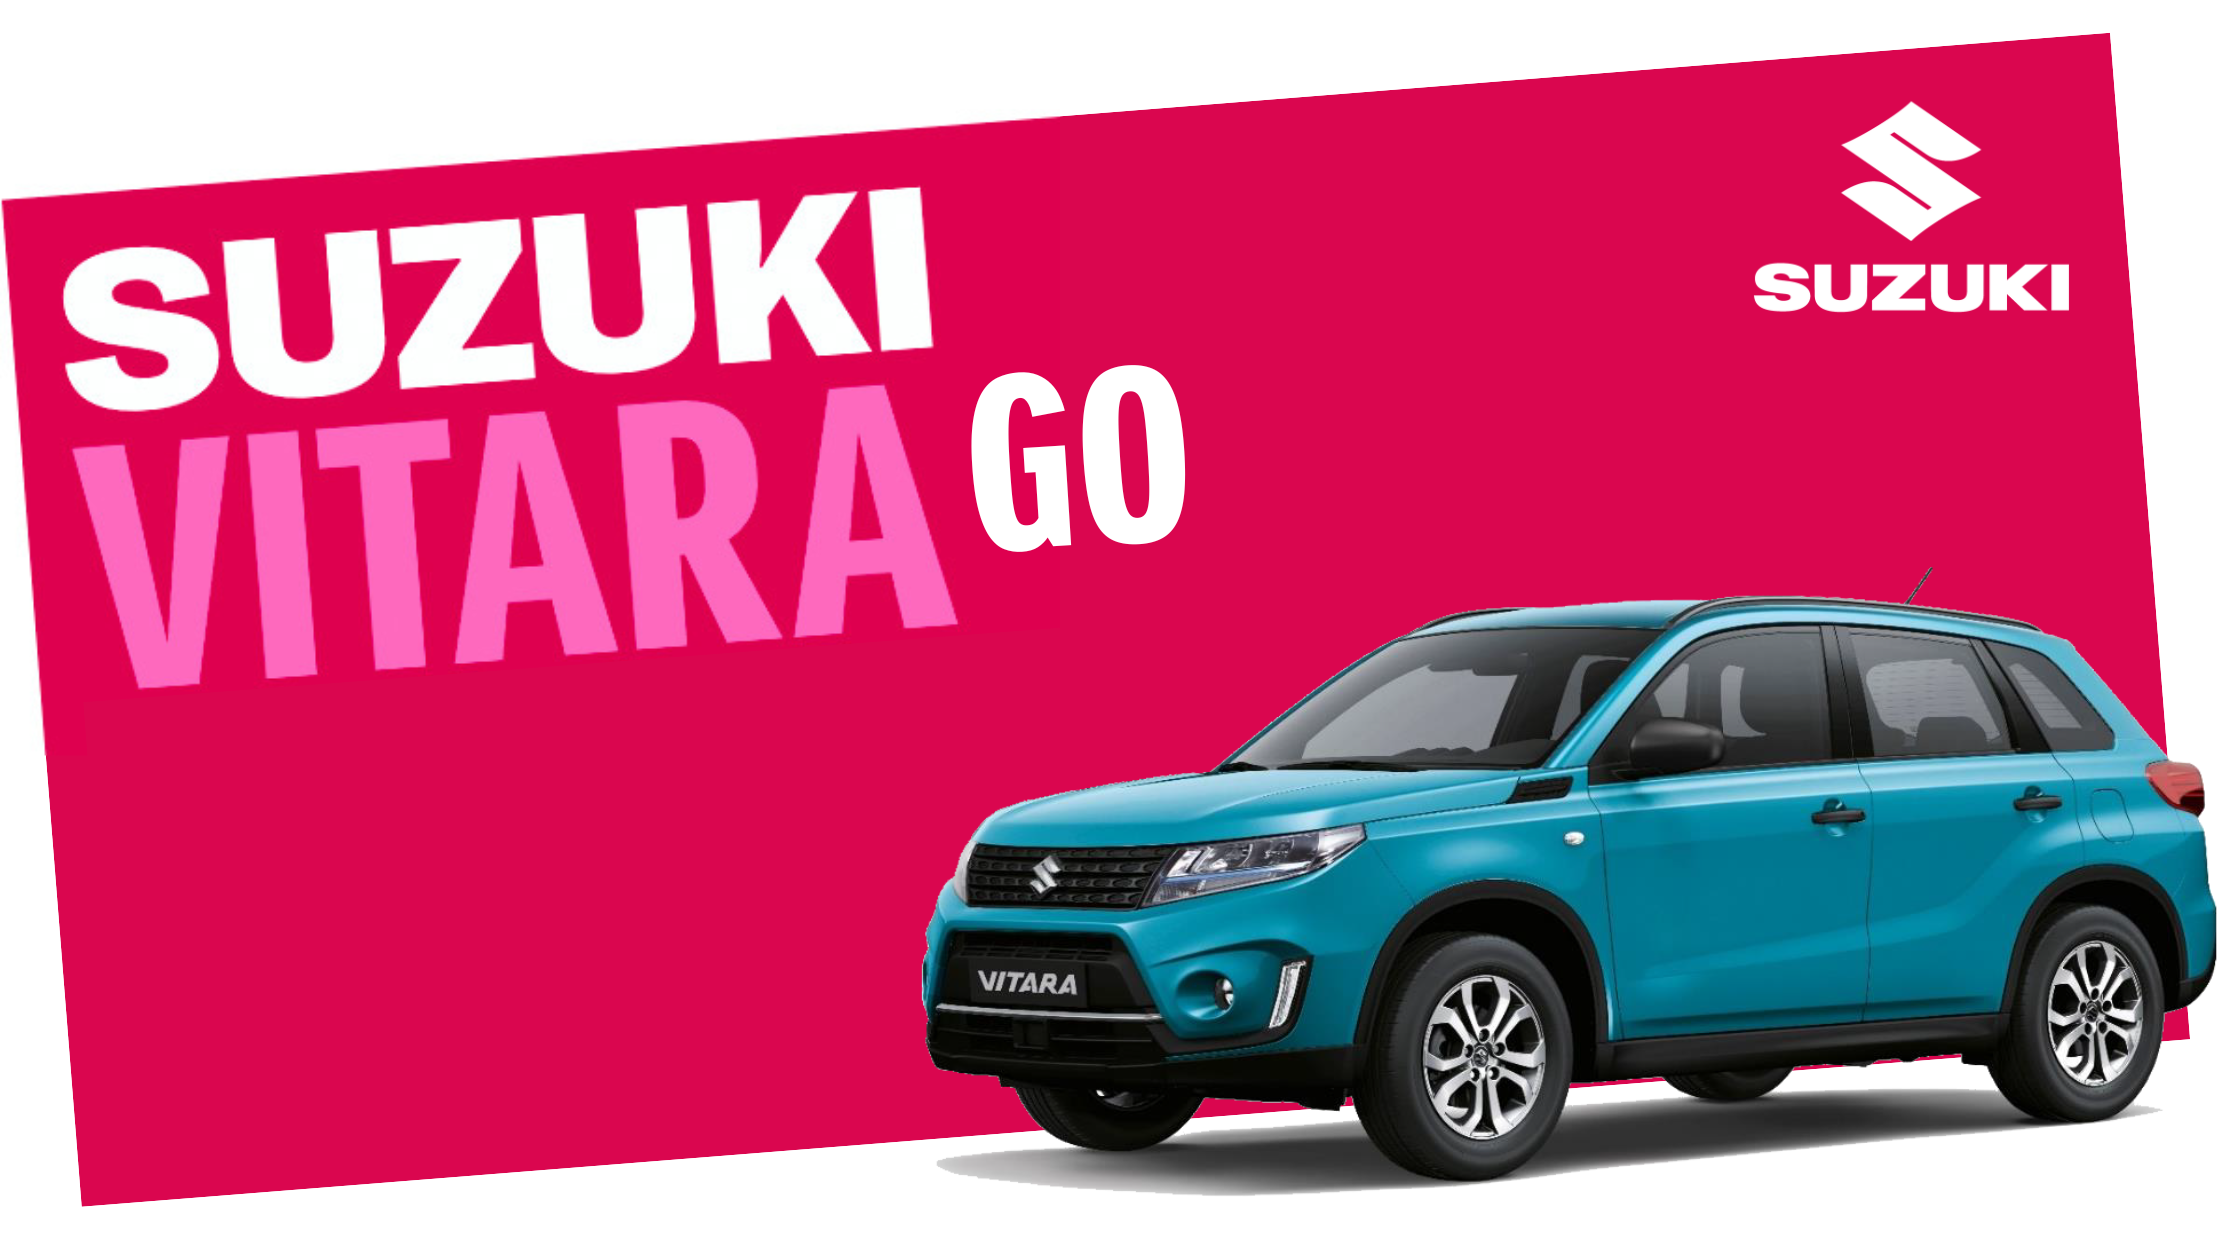 Ready, Set, VITARA GO! Suzuki launches limited edition model